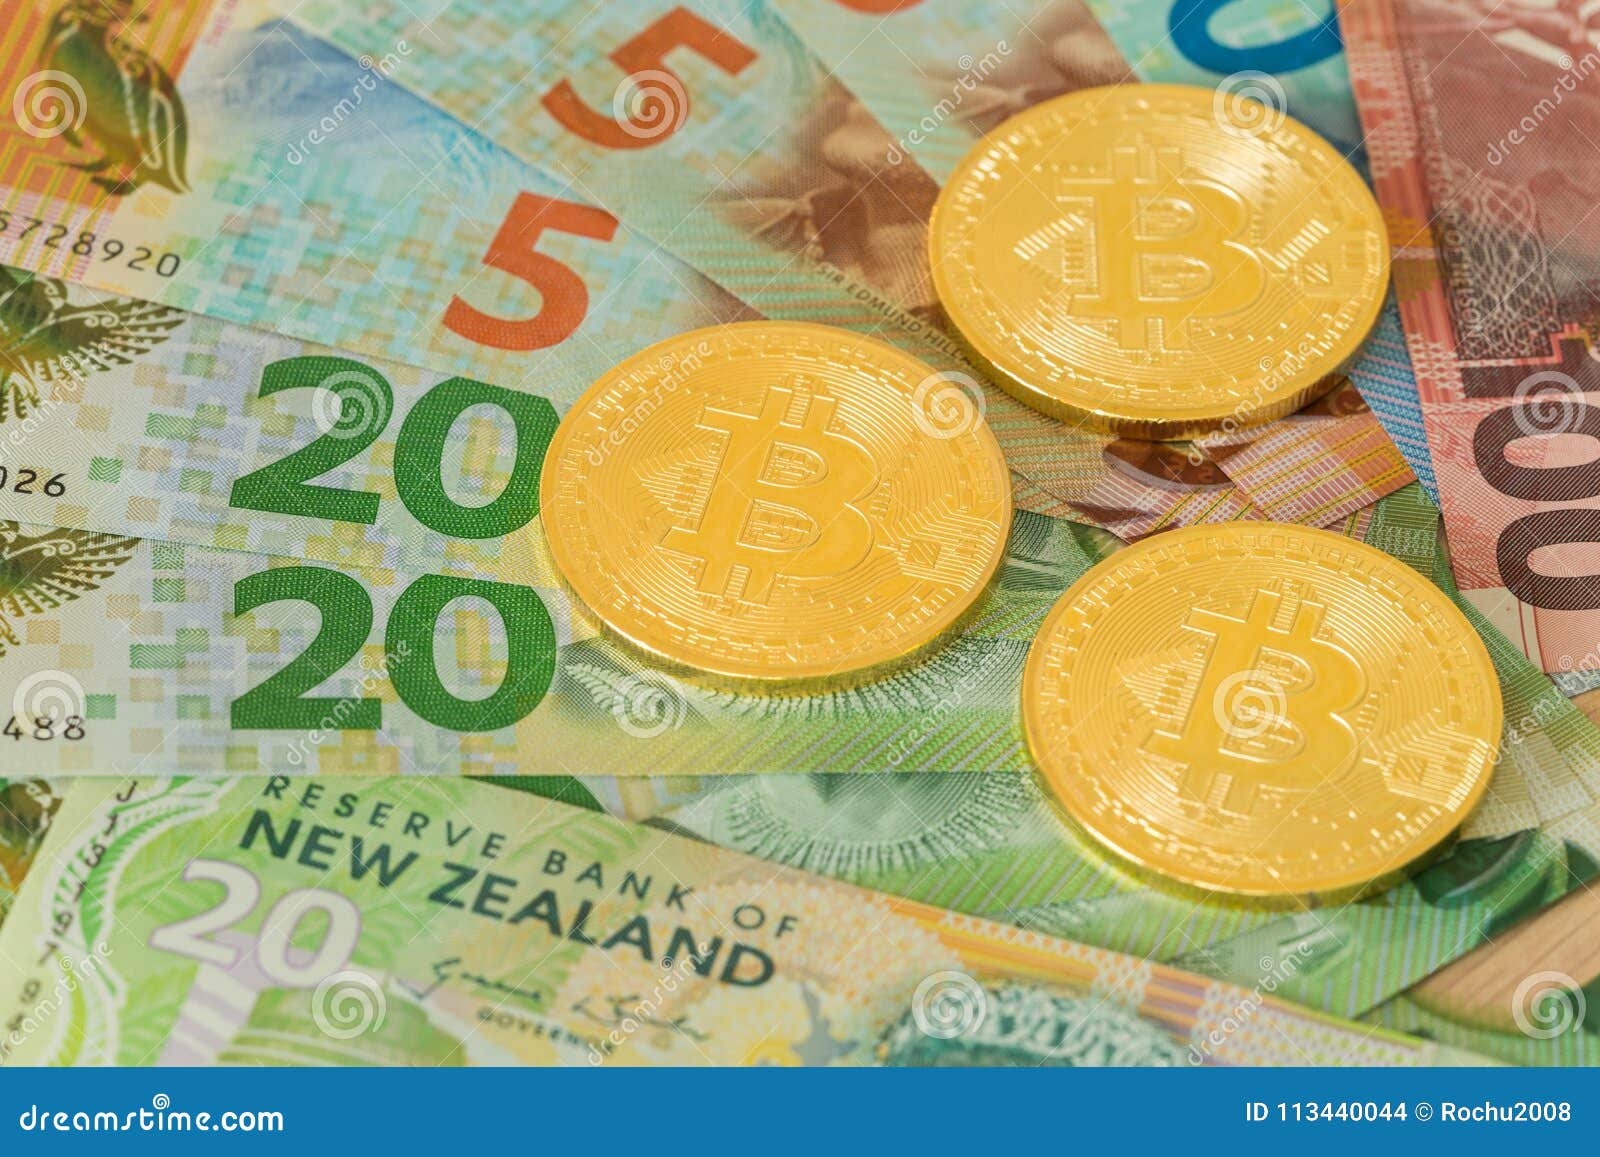 New Zealand Money And Bitcoin Stock Photo Image Of Dollars - 